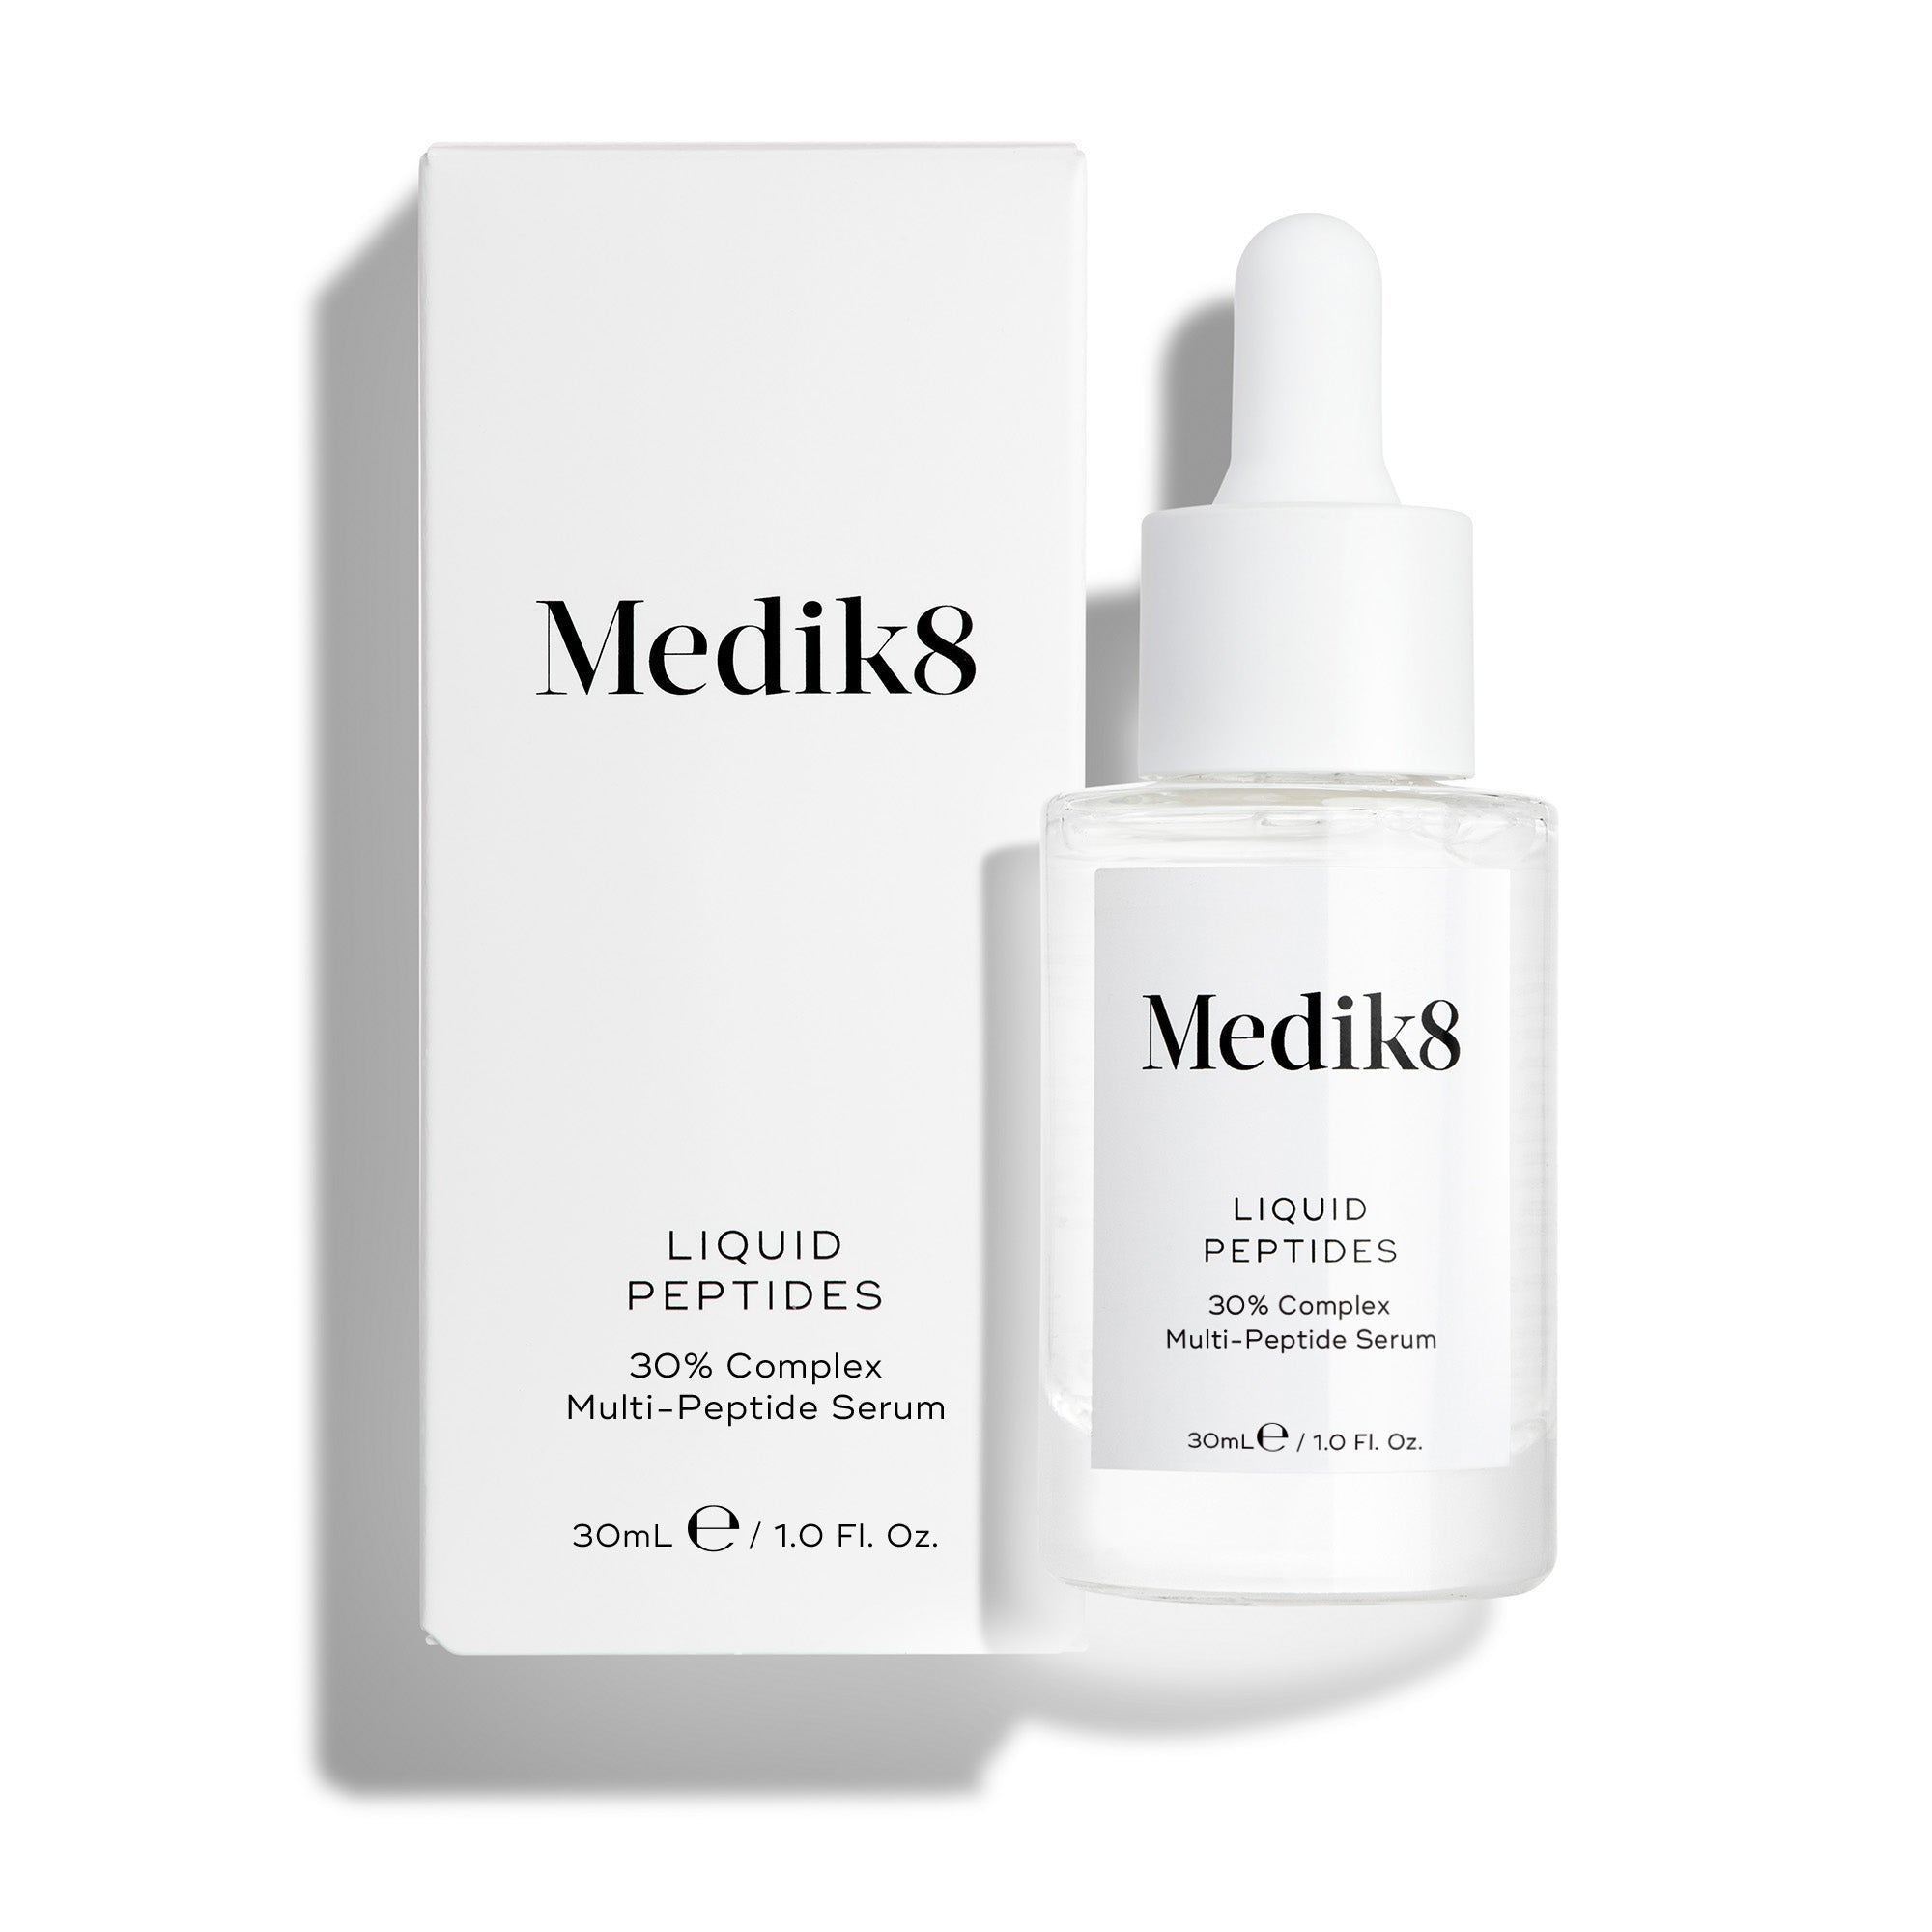 Liquid Peptides™ MEDIK8 Official Stockist. Worldwide shipping. Medical-grade skincare. The M-ethod Aesthetics